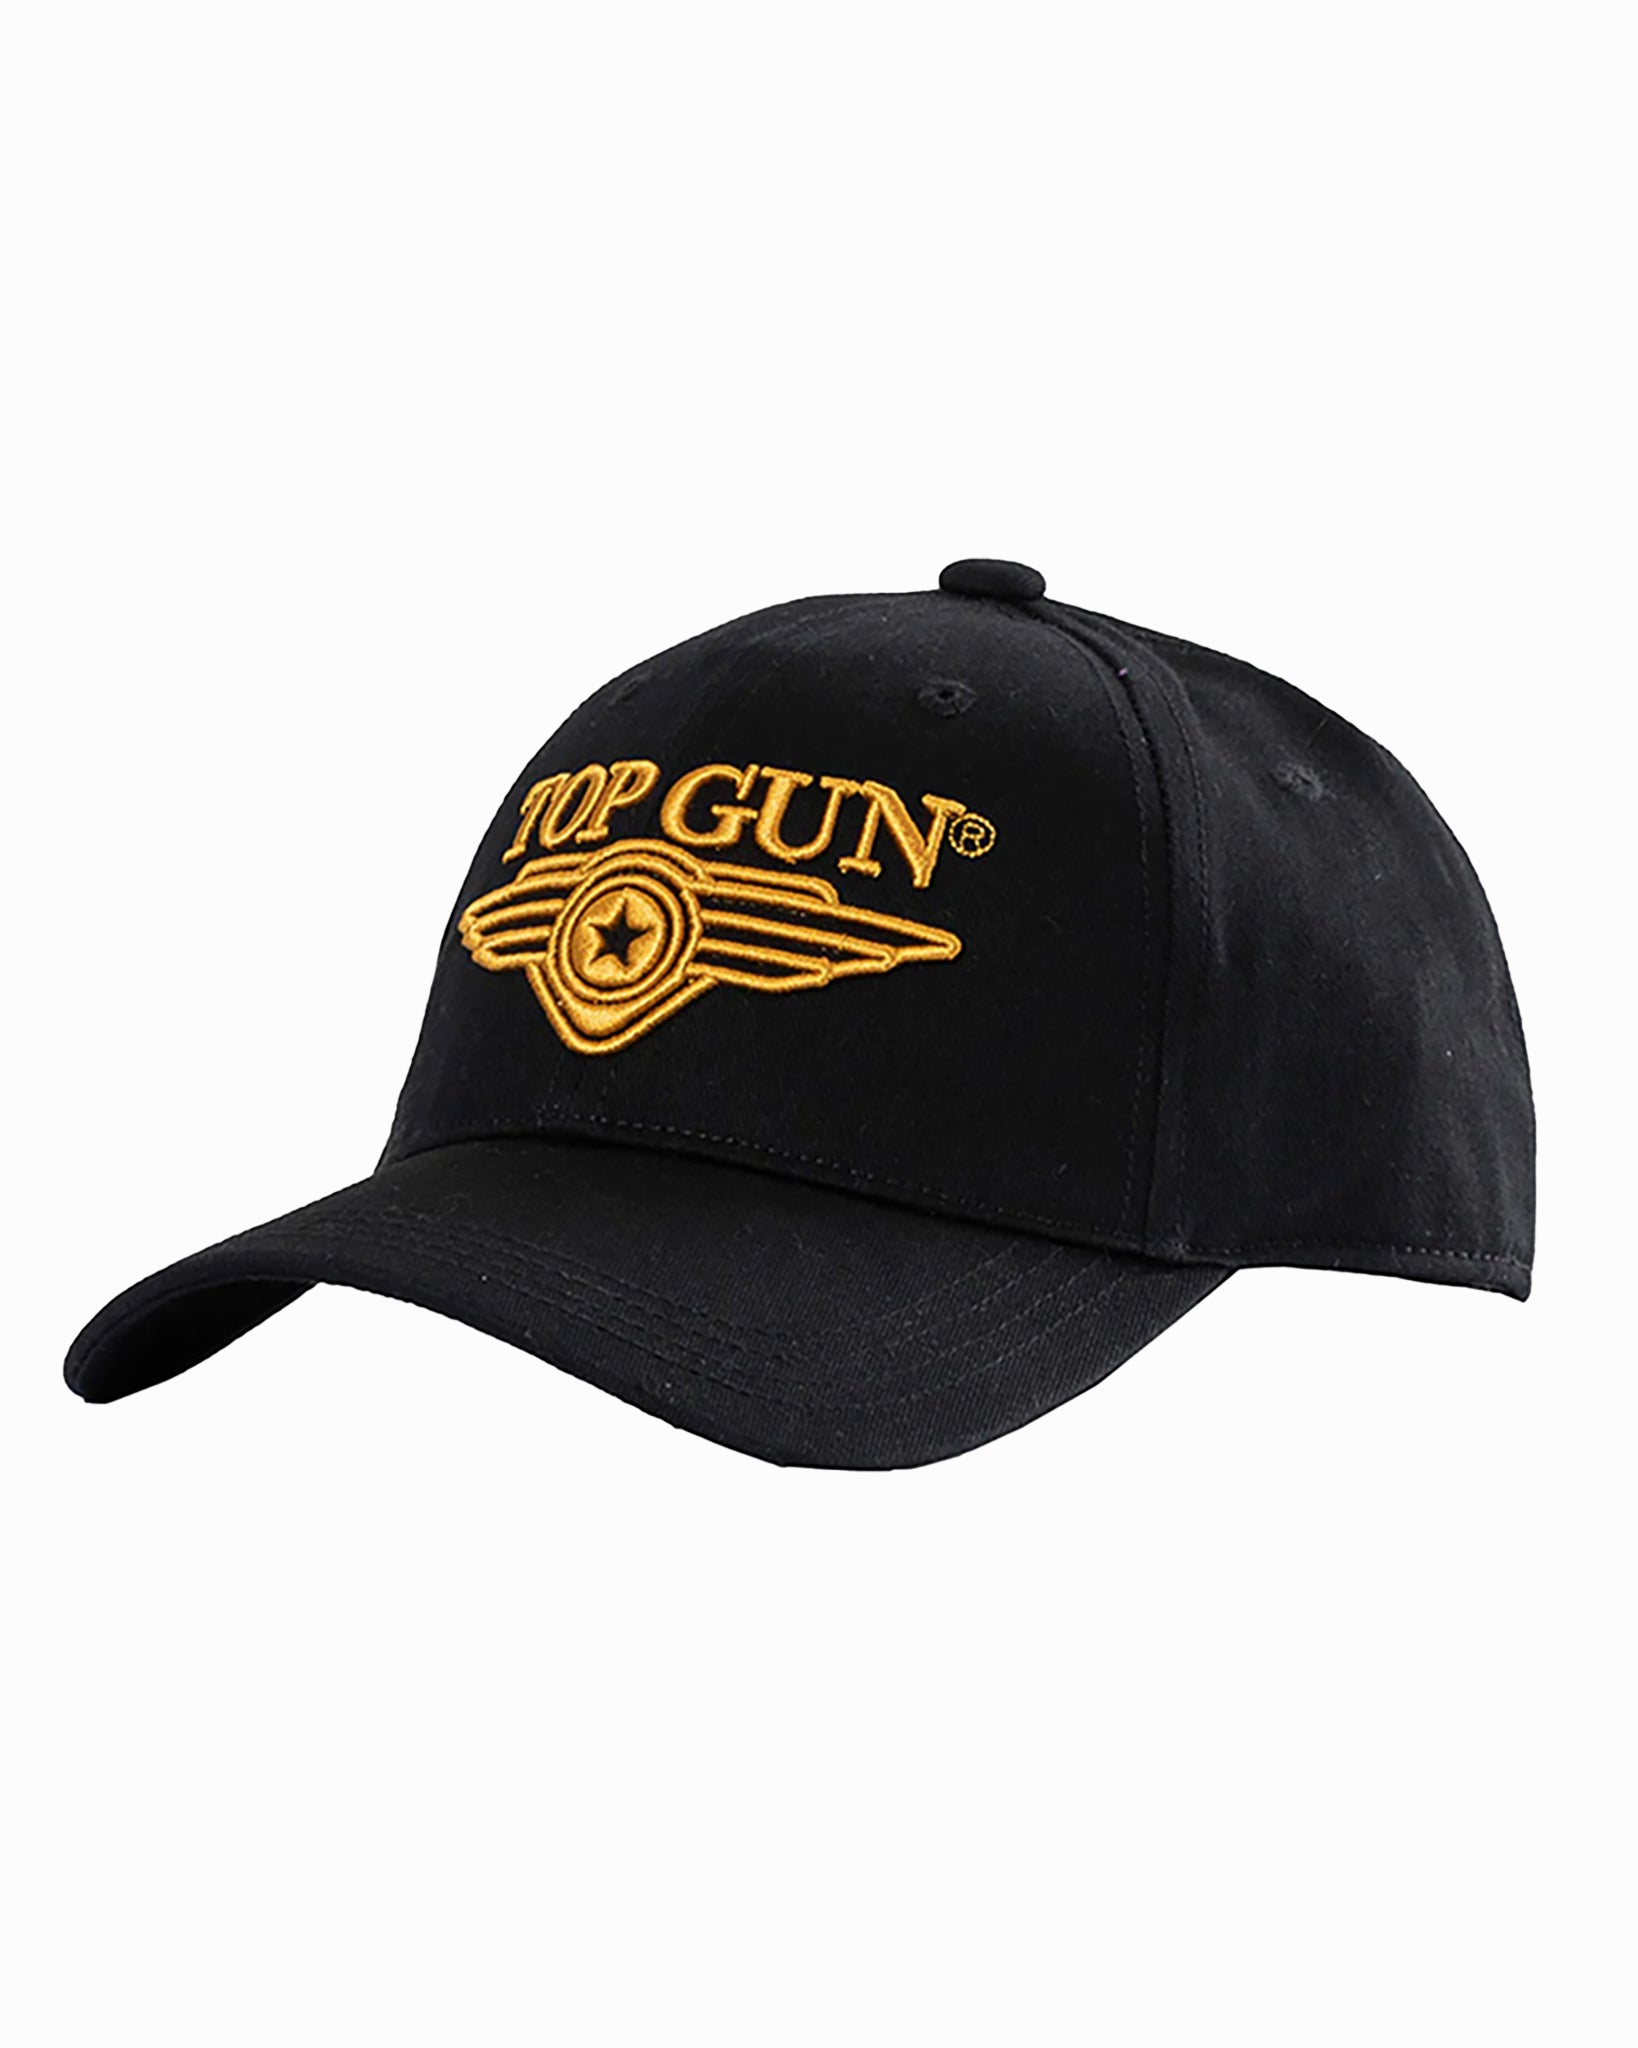 TOP GUN® 3D LOGO – Top Gun Store CAP